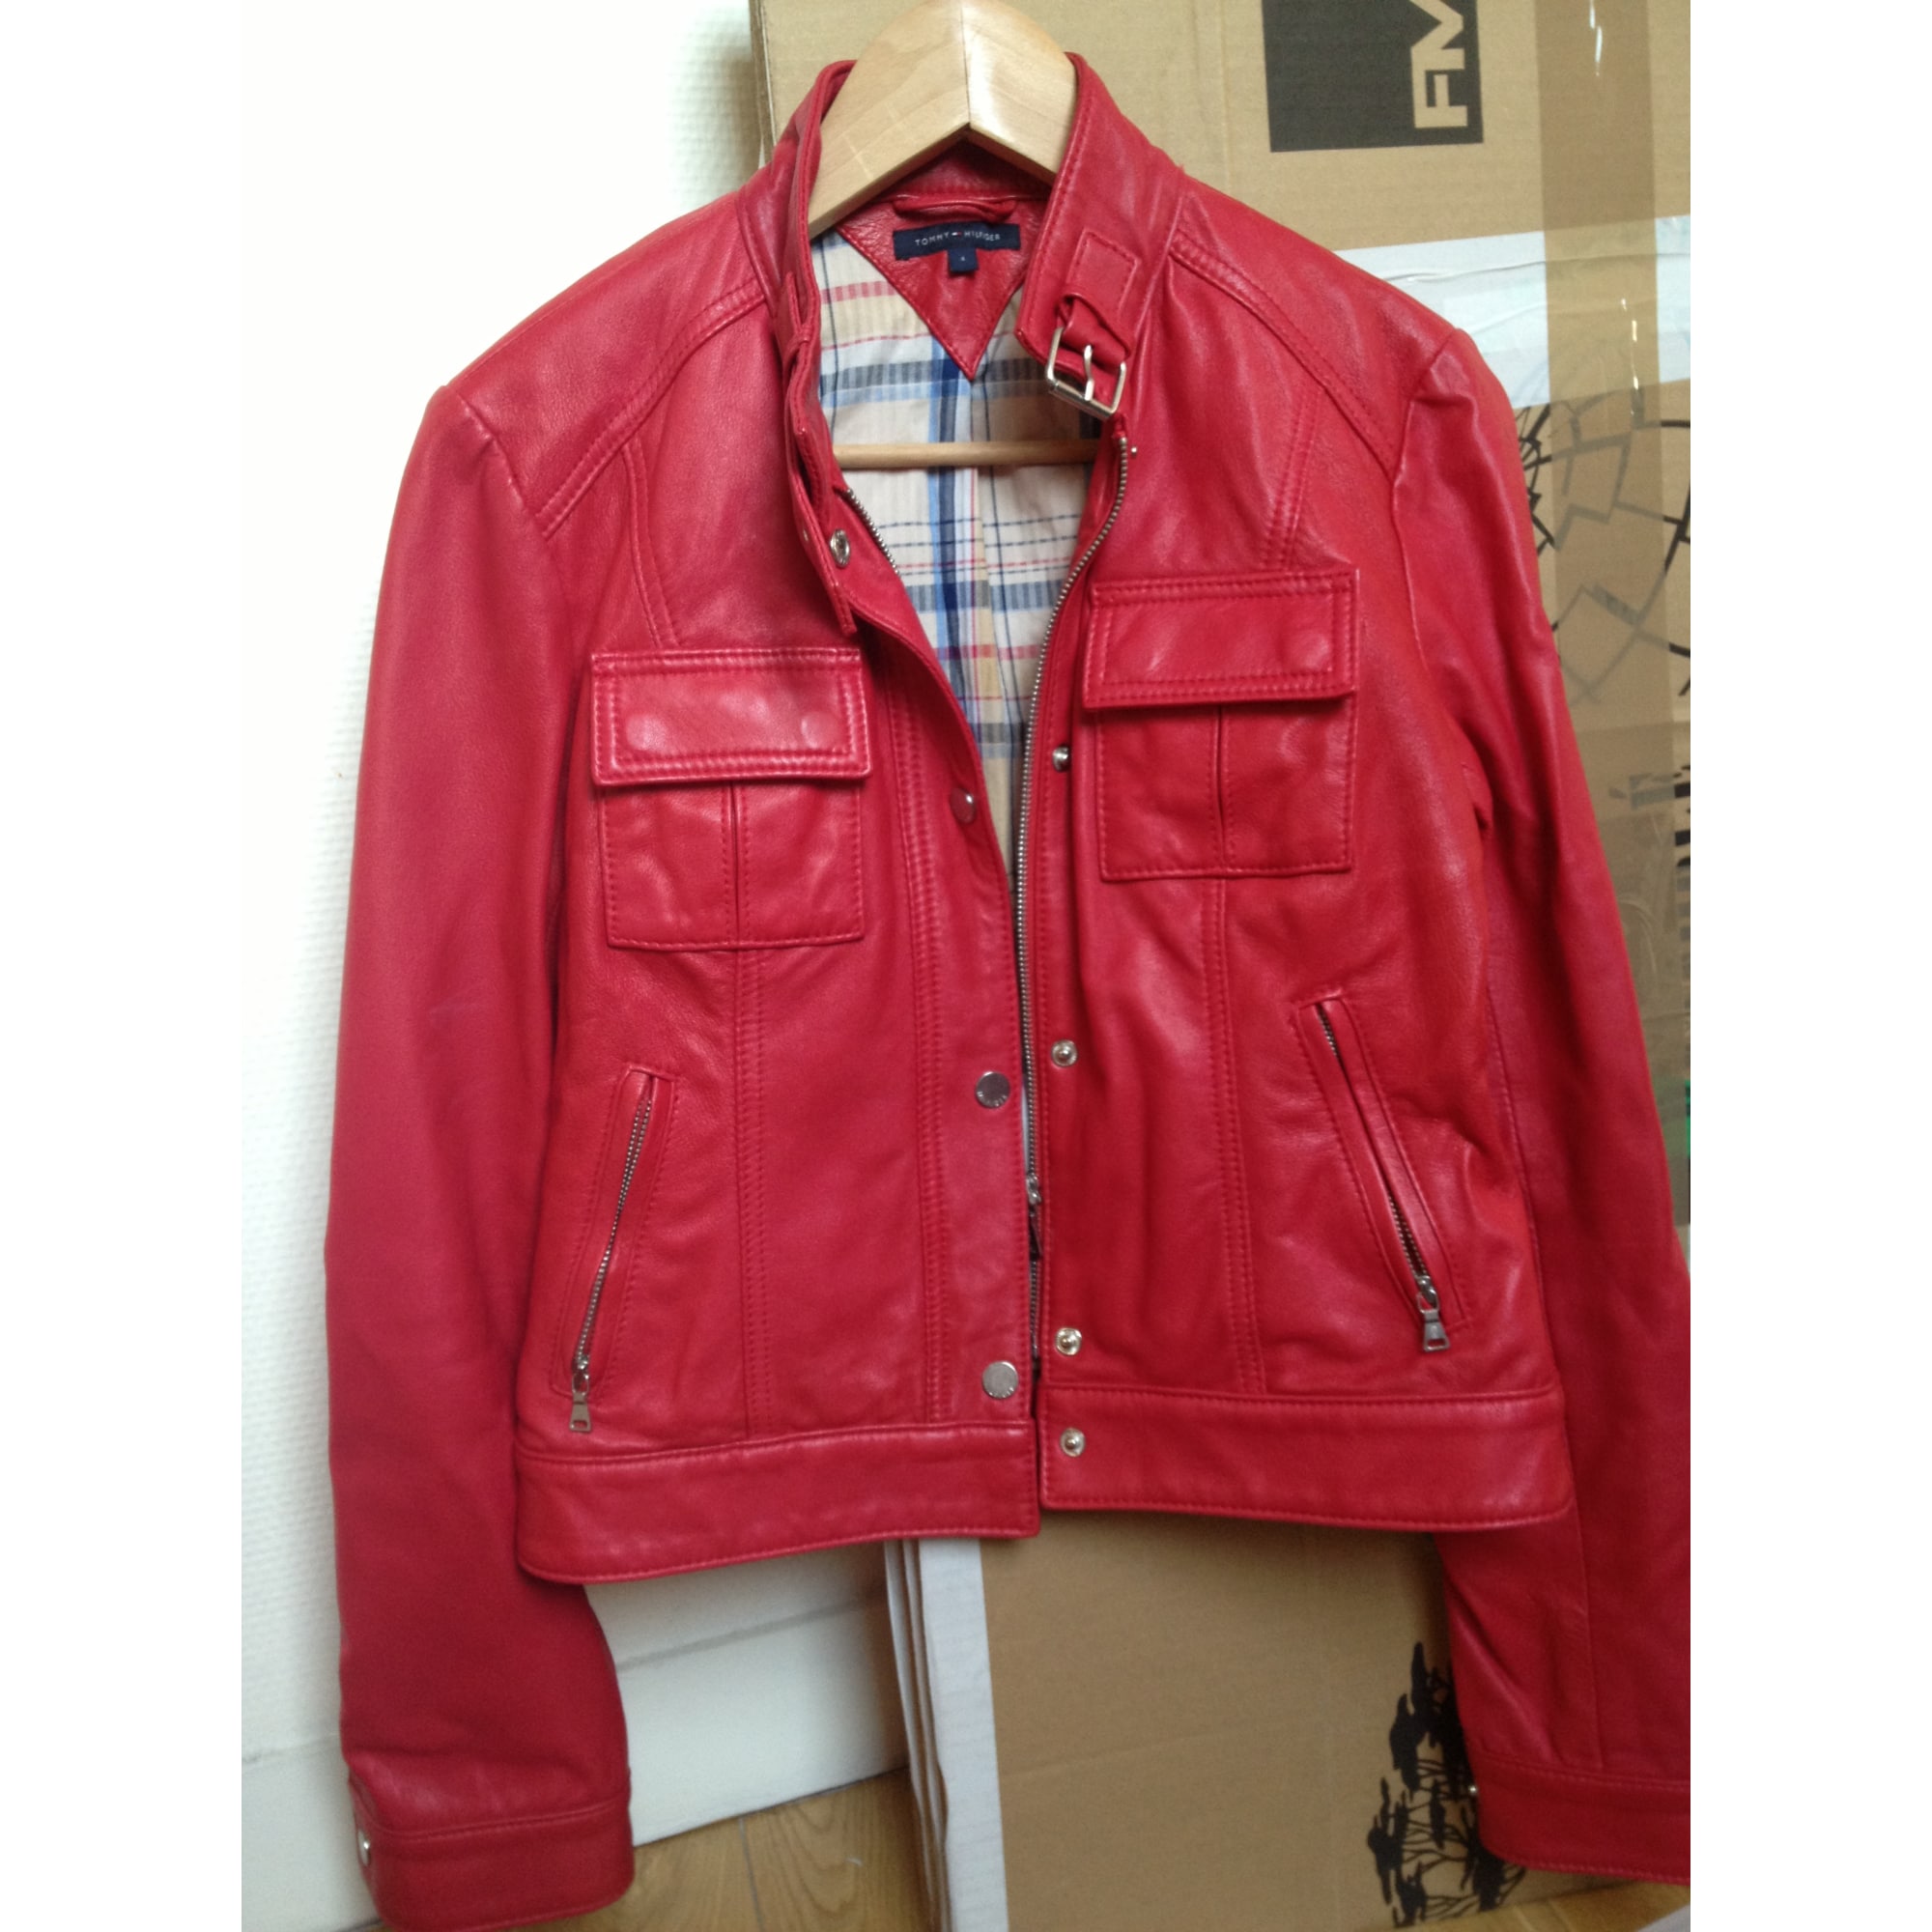 Veste en cuir TOMMY HILFIGER 36 (S, T1) rouge vendu par Marine310788 -  1609746